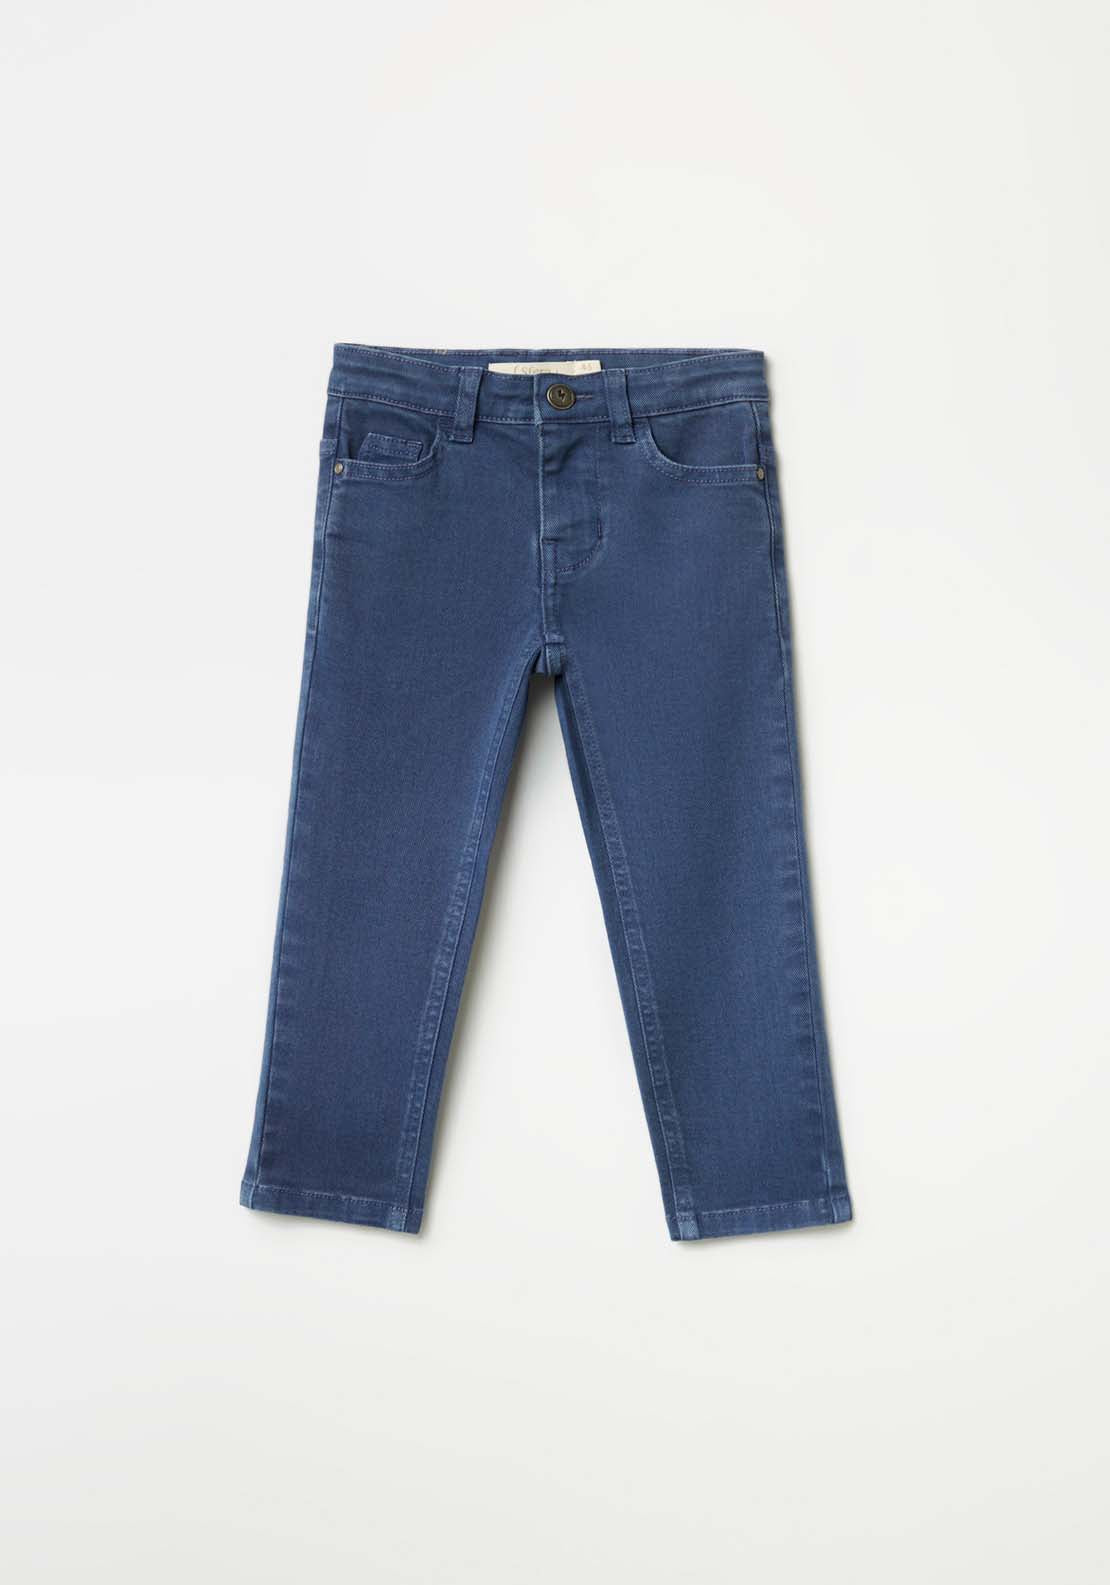 Sfera Denim Jeans - Navy / Blue 1 Shaws Department Stores